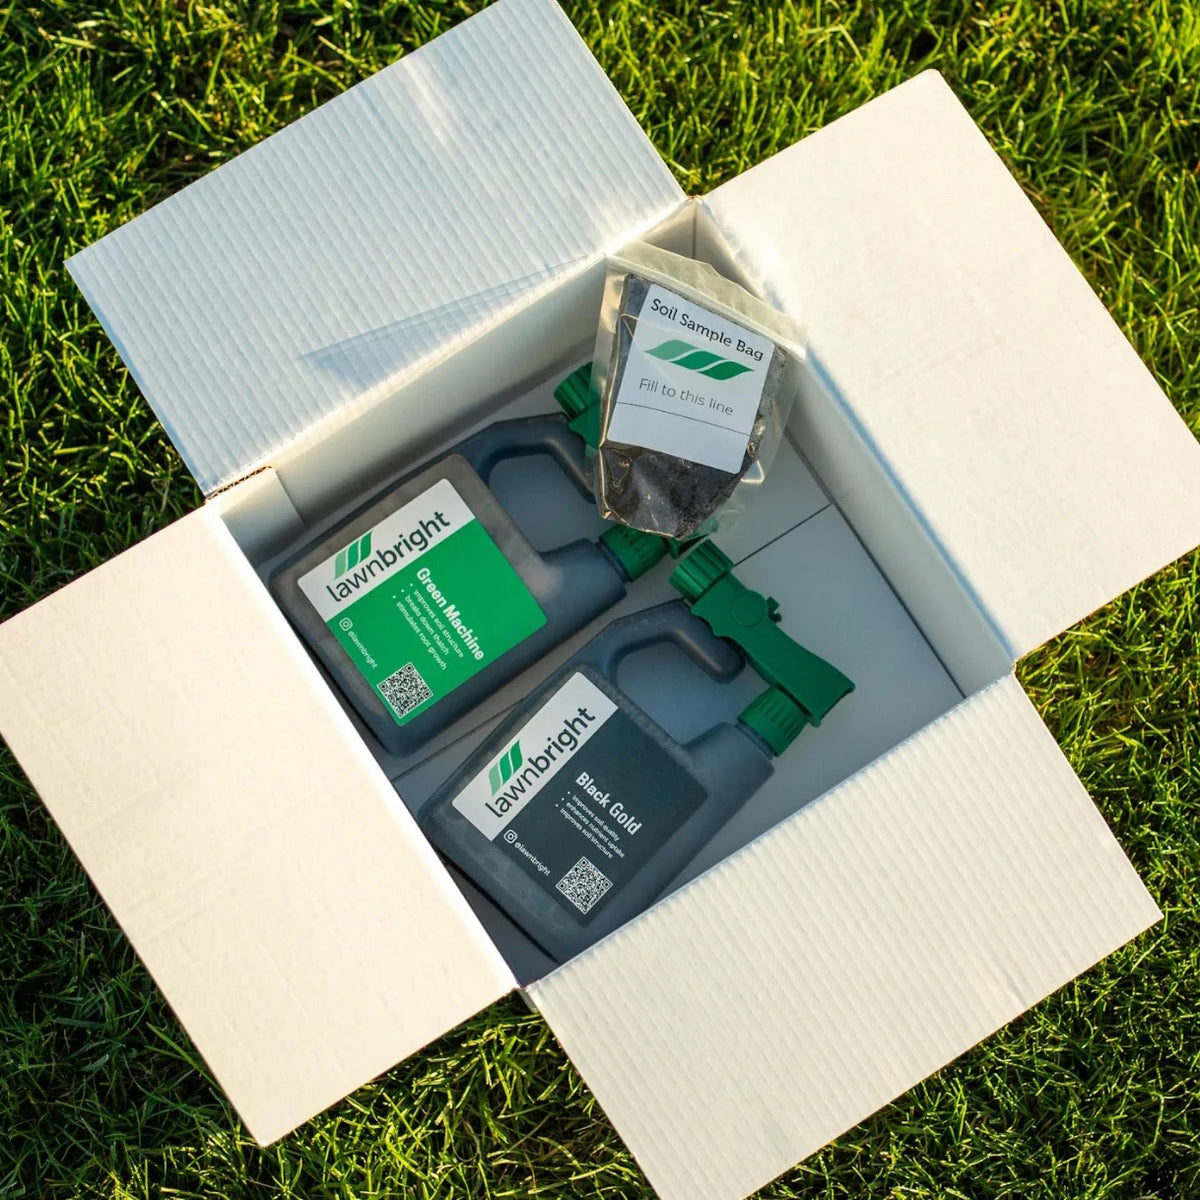 Lawnbright shipment of Green Machine, Black Gold, and Soil Sample kit.